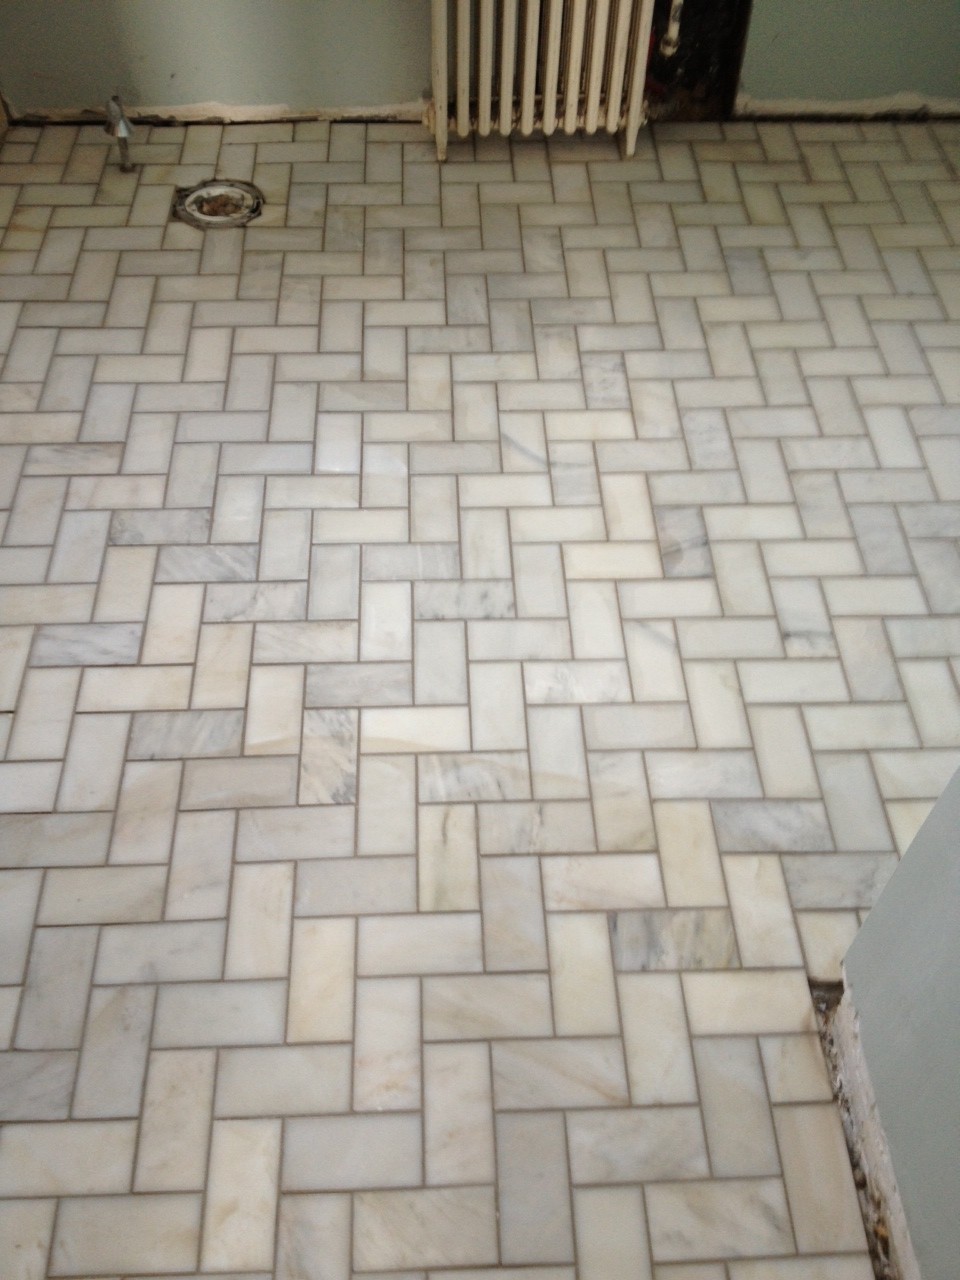 herringbone-tile-floor-pattern-qzodor90